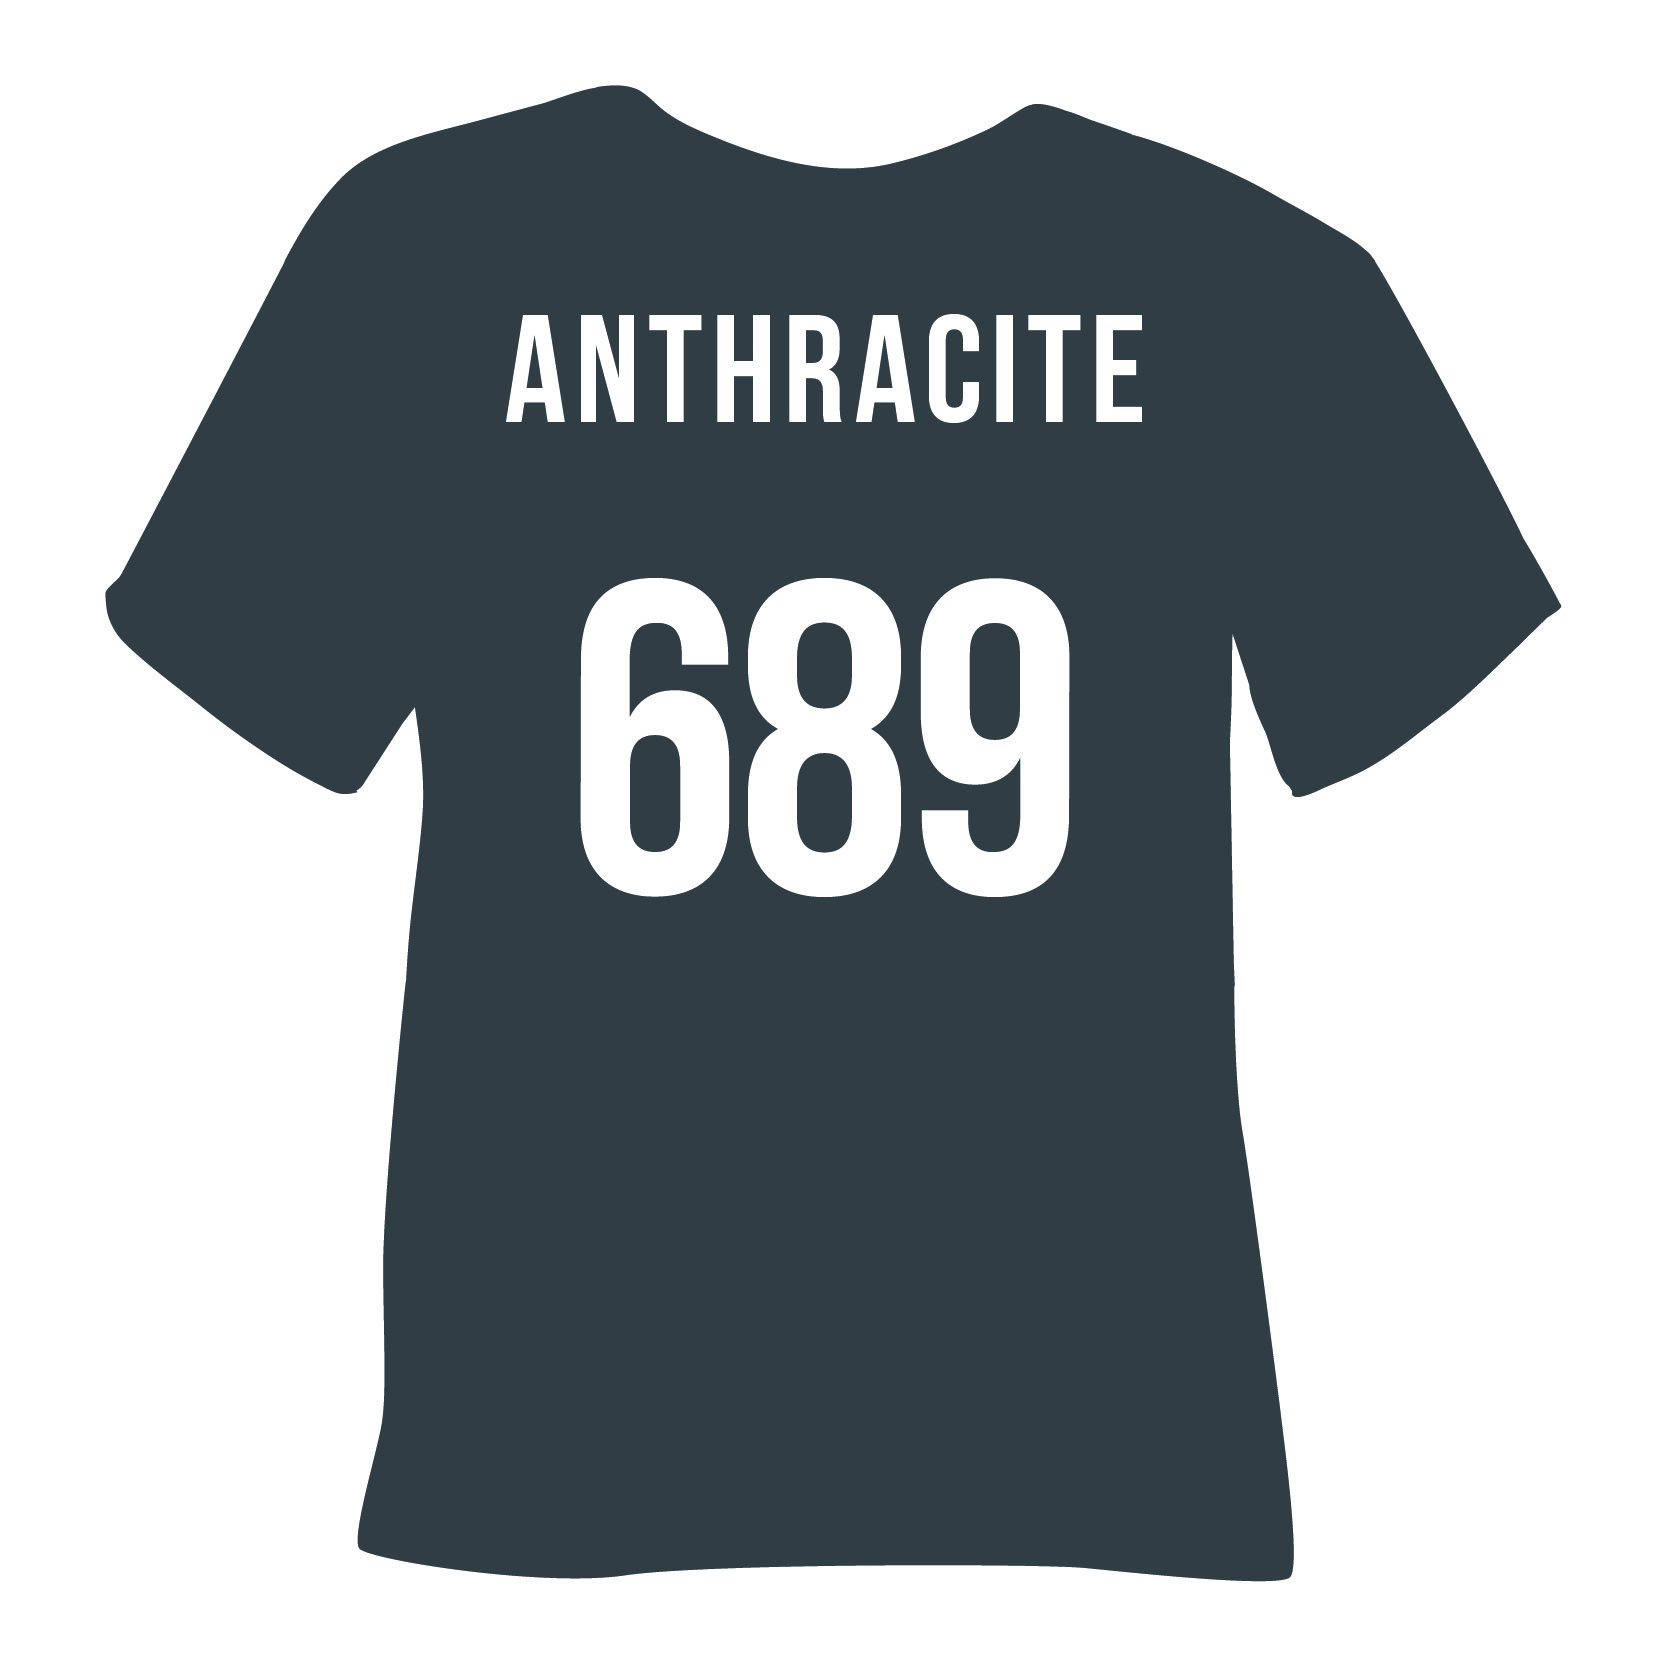 689 ANTHRACITE